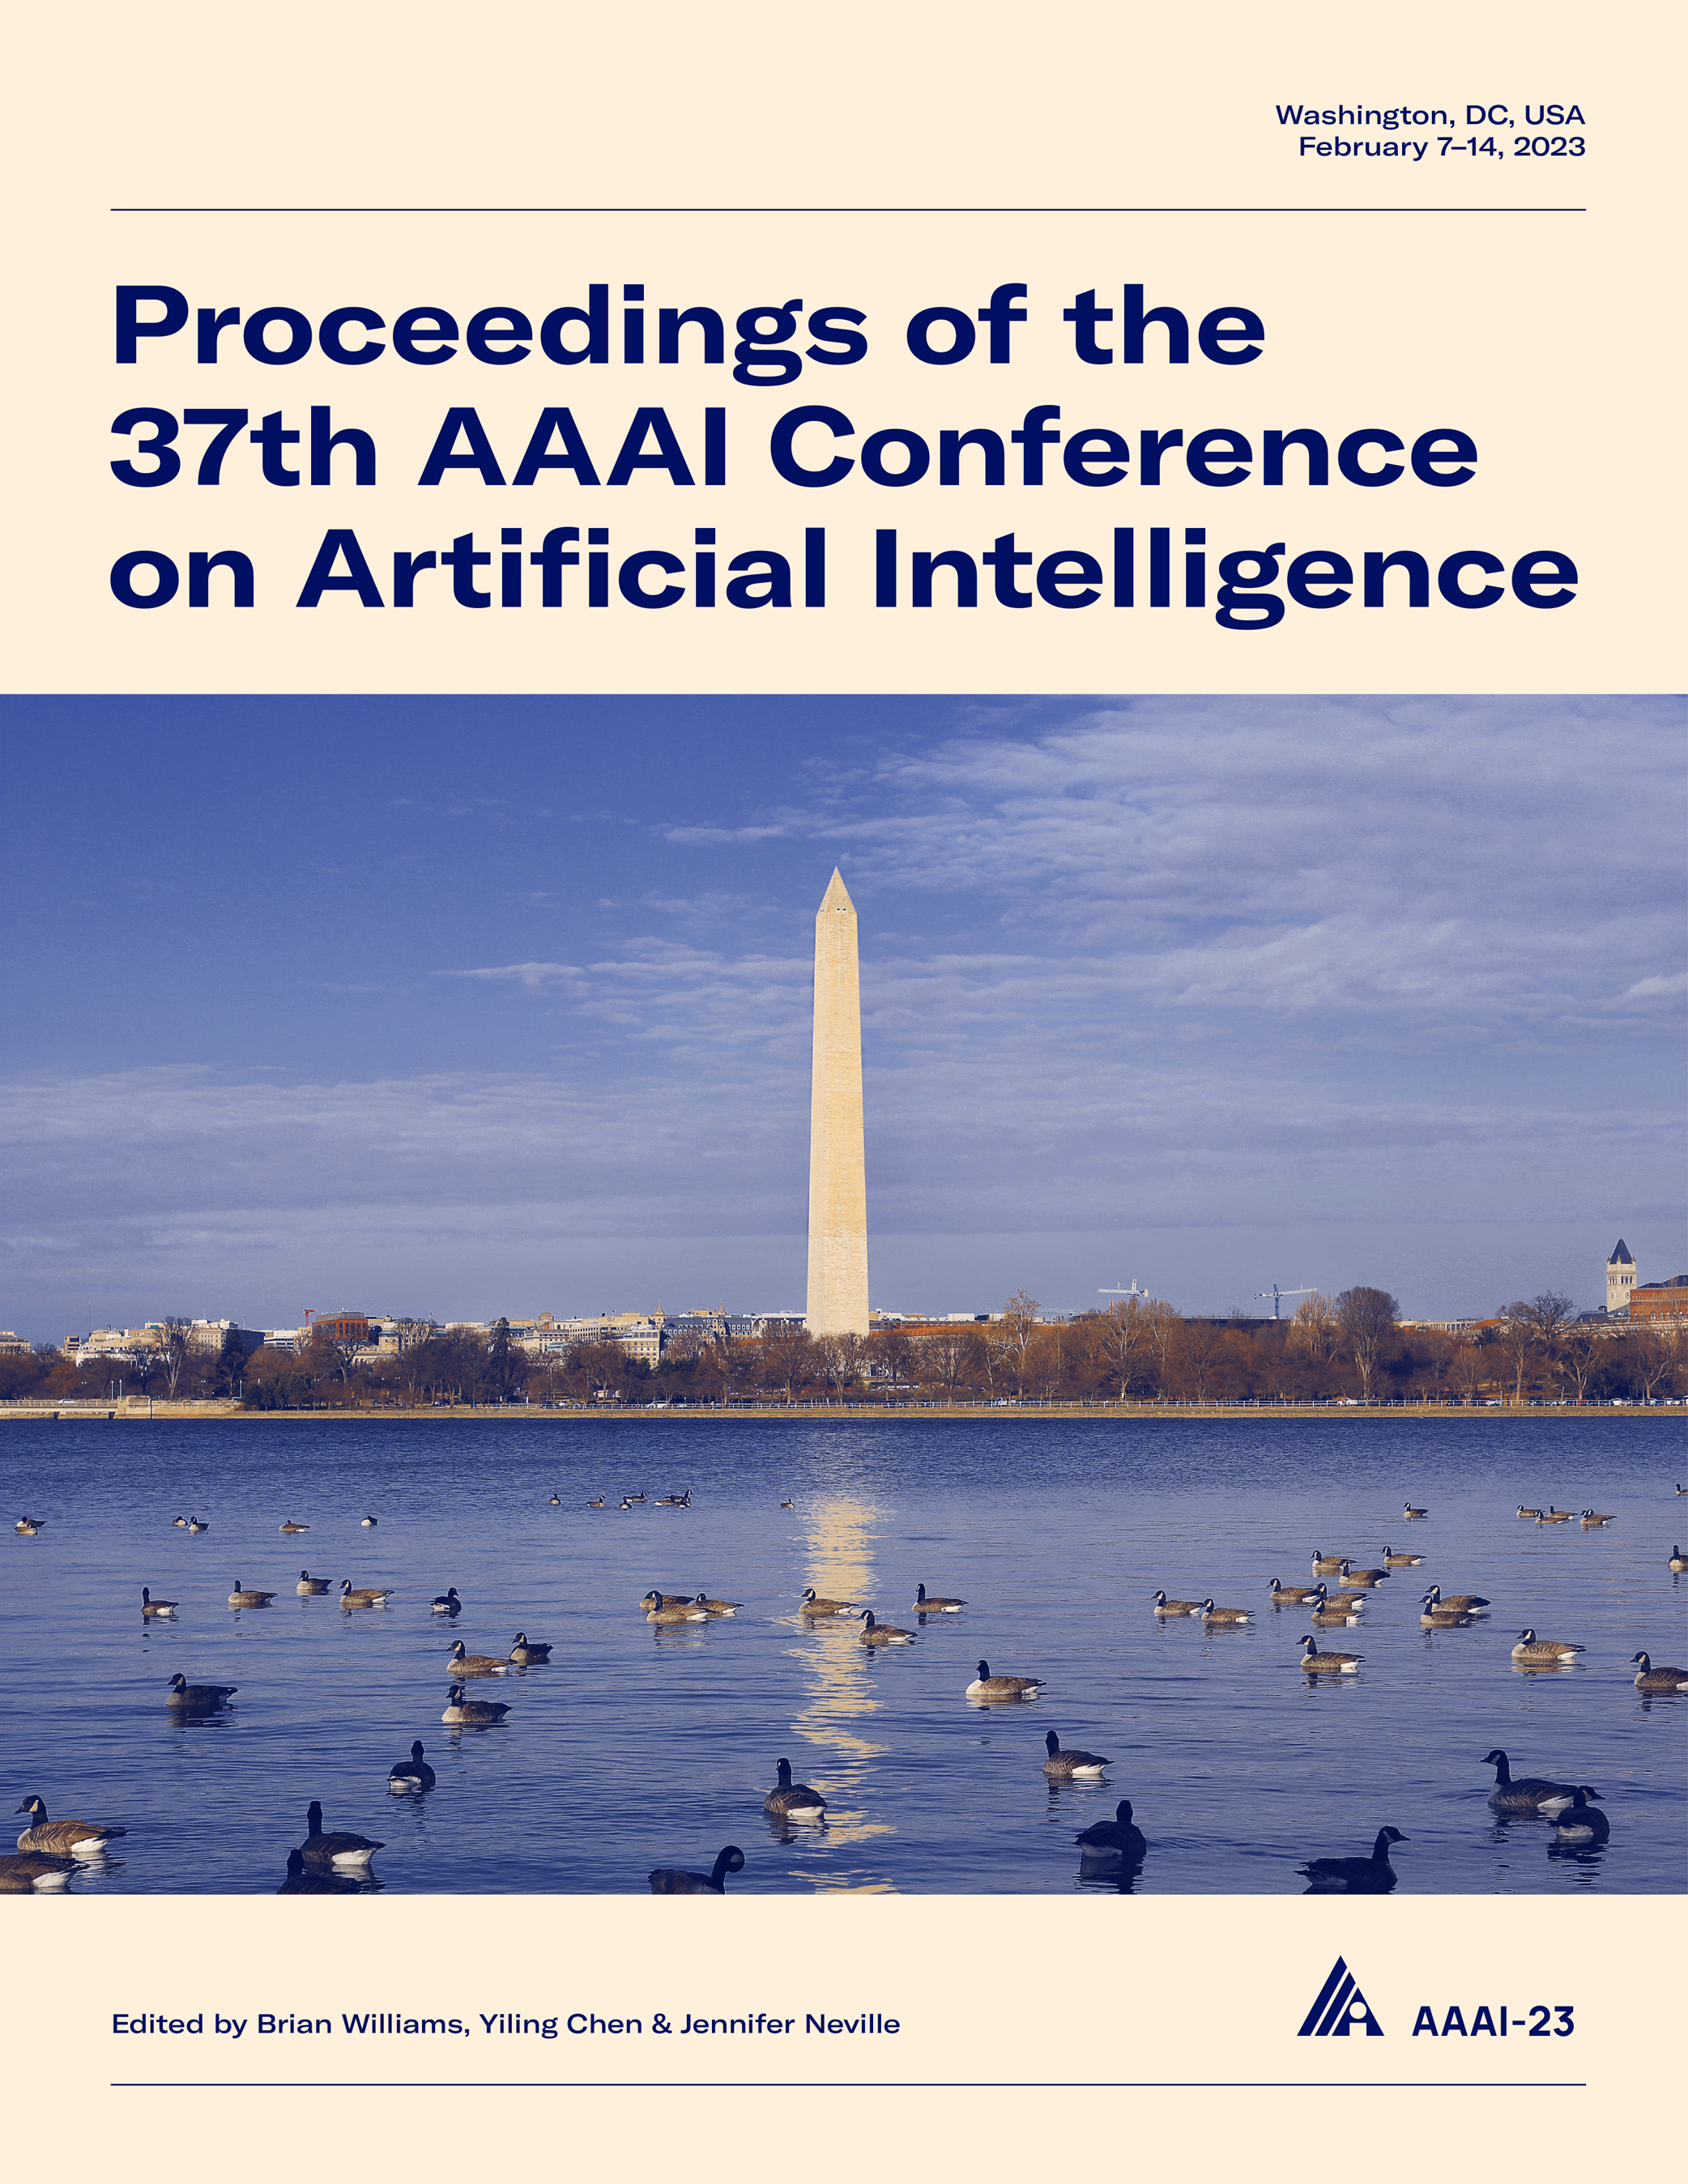 AAAI-23 Proceedings Cover